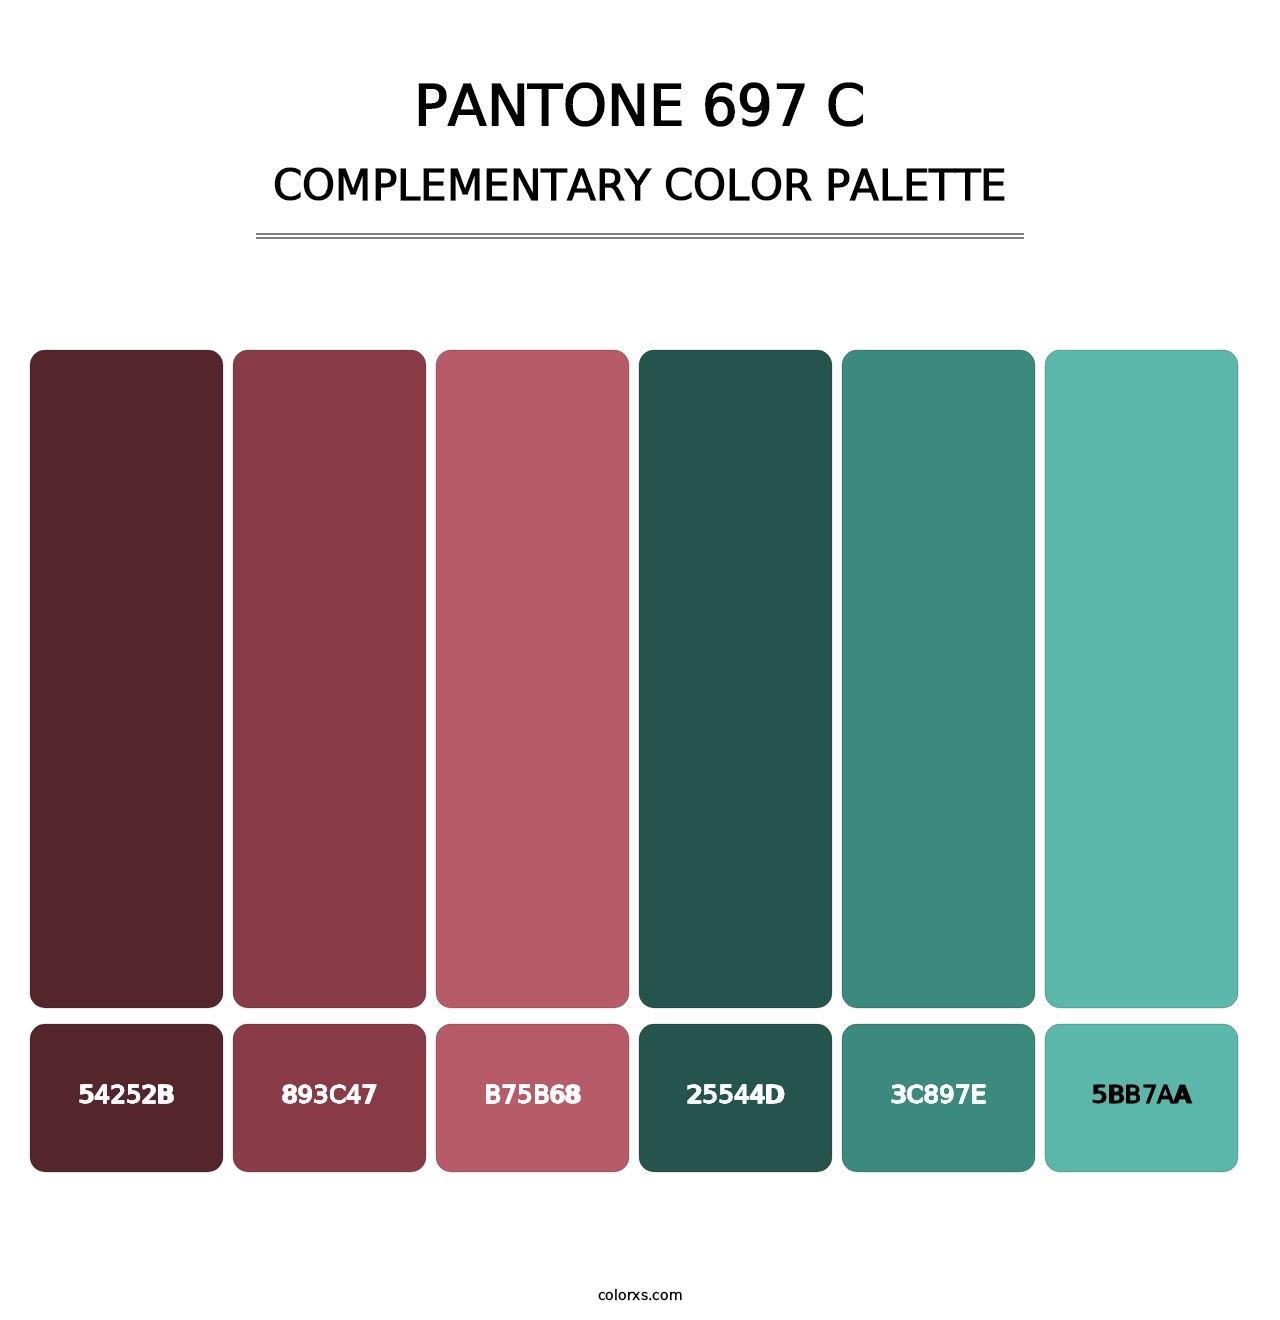 PANTONE 697 C - Complementary Color Palette